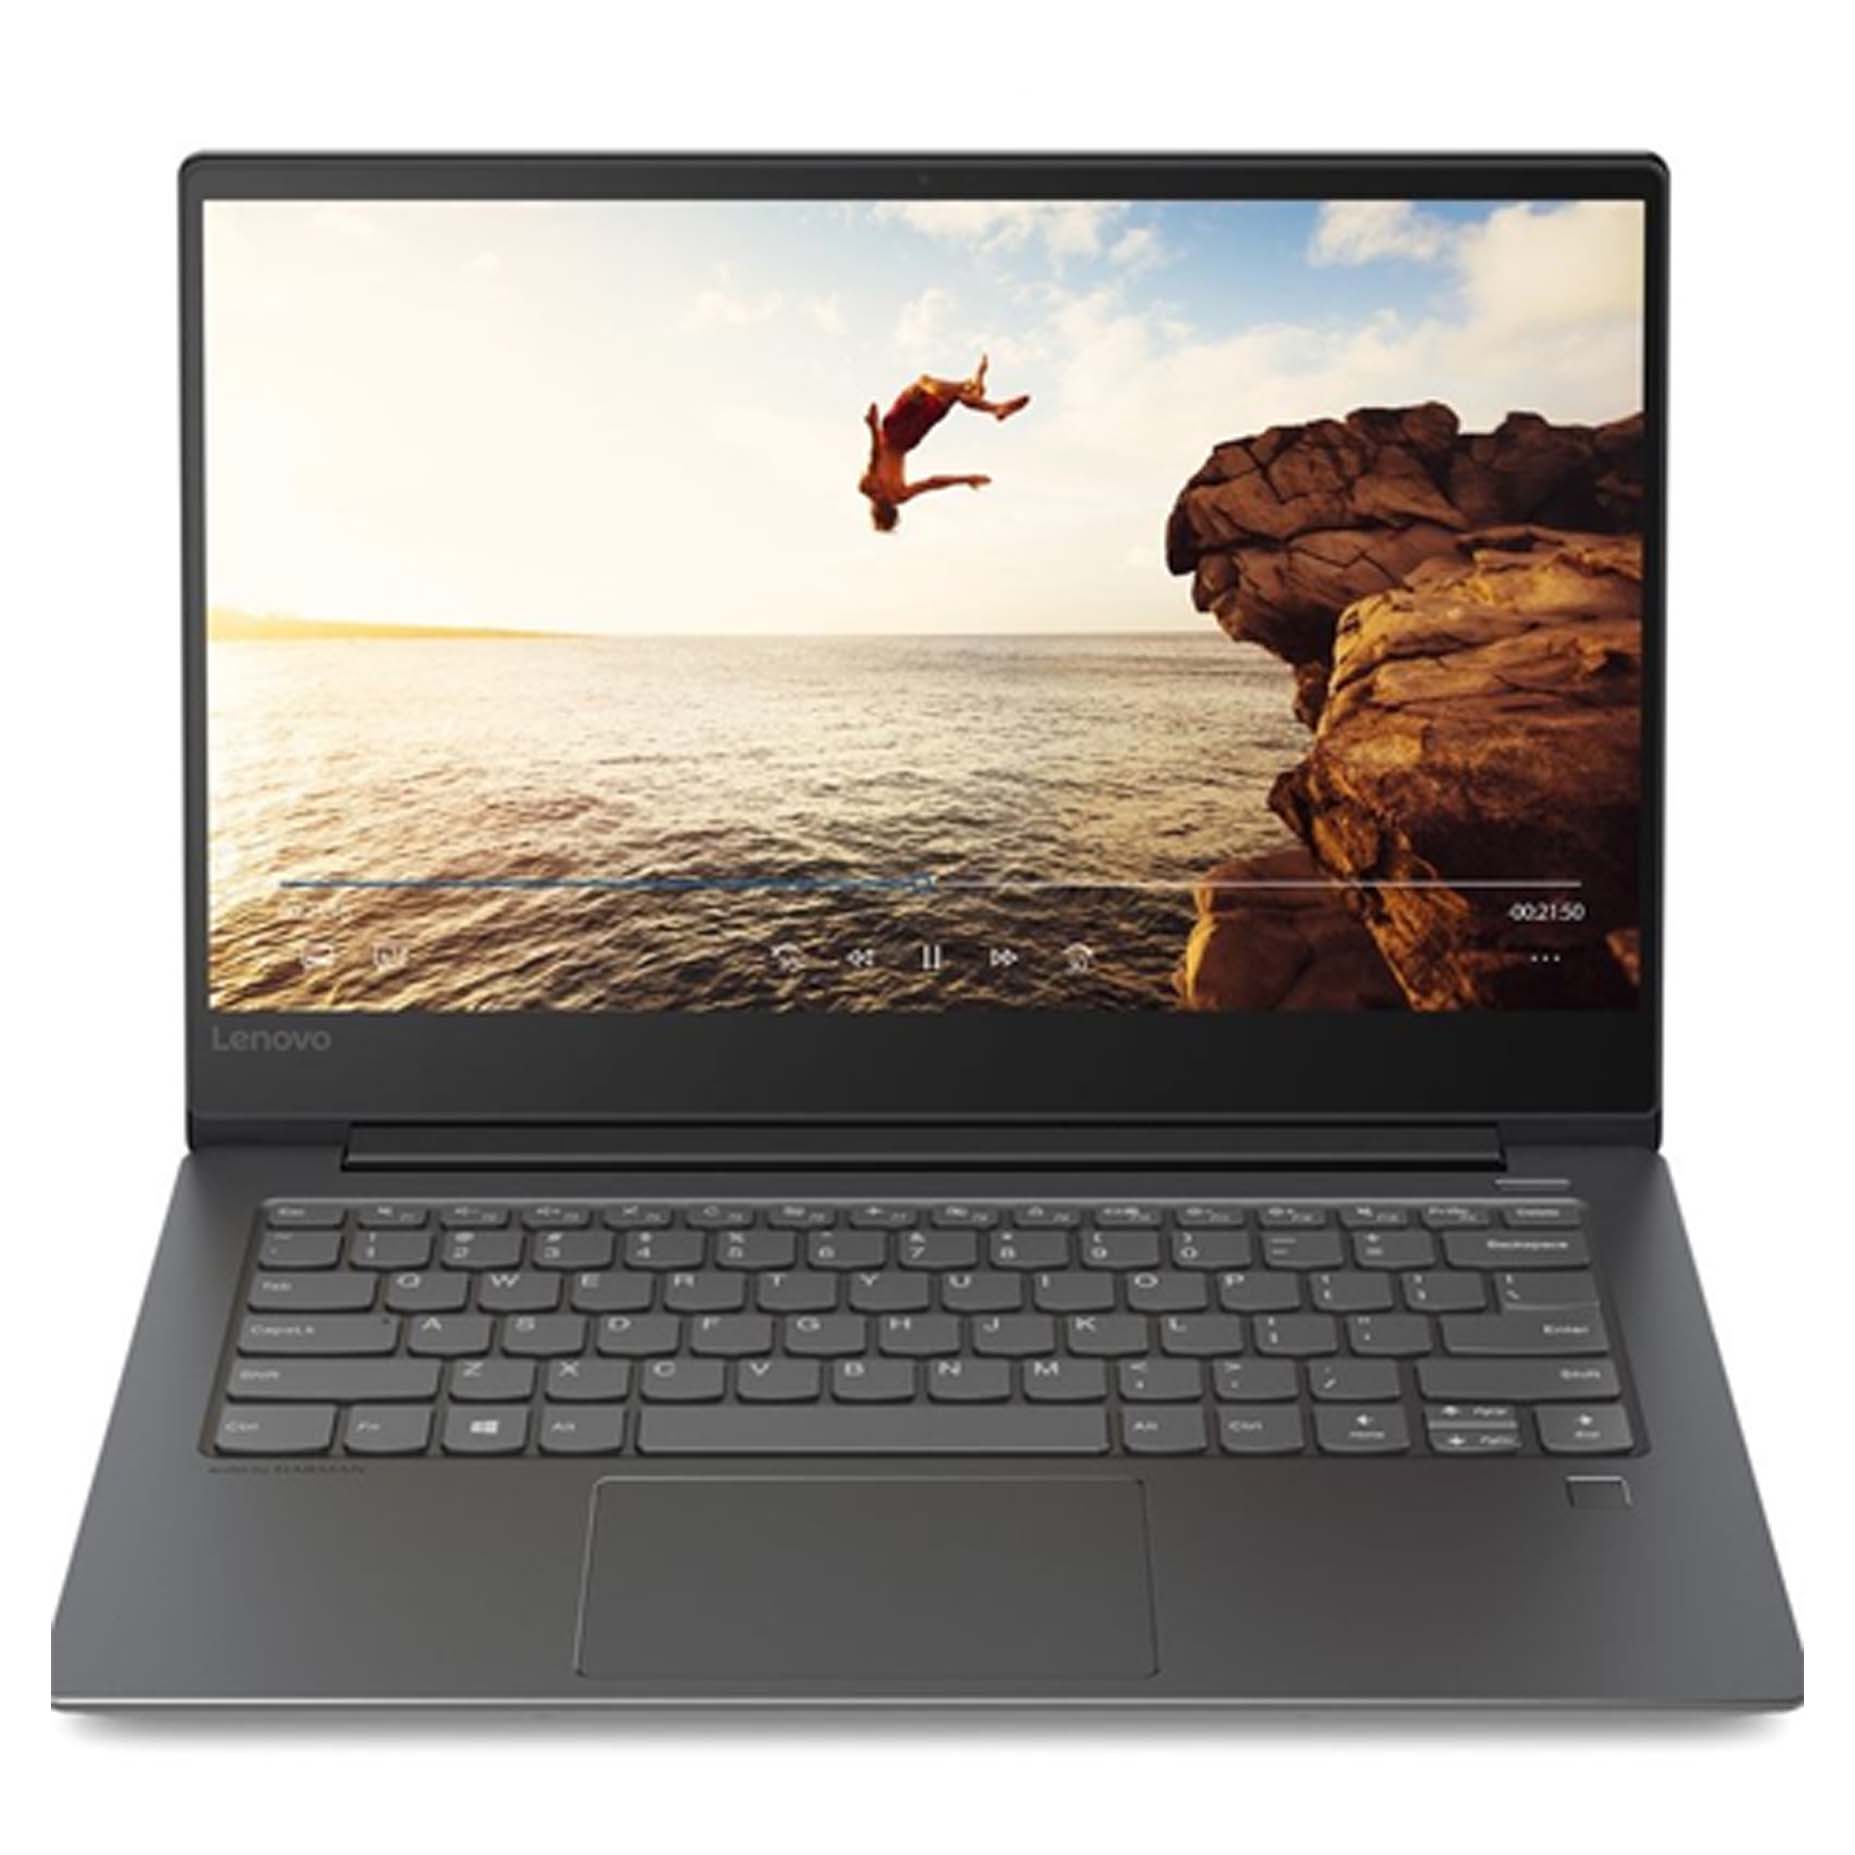 Harga Lenovo Ideapad IP530S-13IWL 46ID Laptop Intel Core i7-8565U 16GB 512GB Nvidia MX150 2GB Windows 10 13.3 Inch